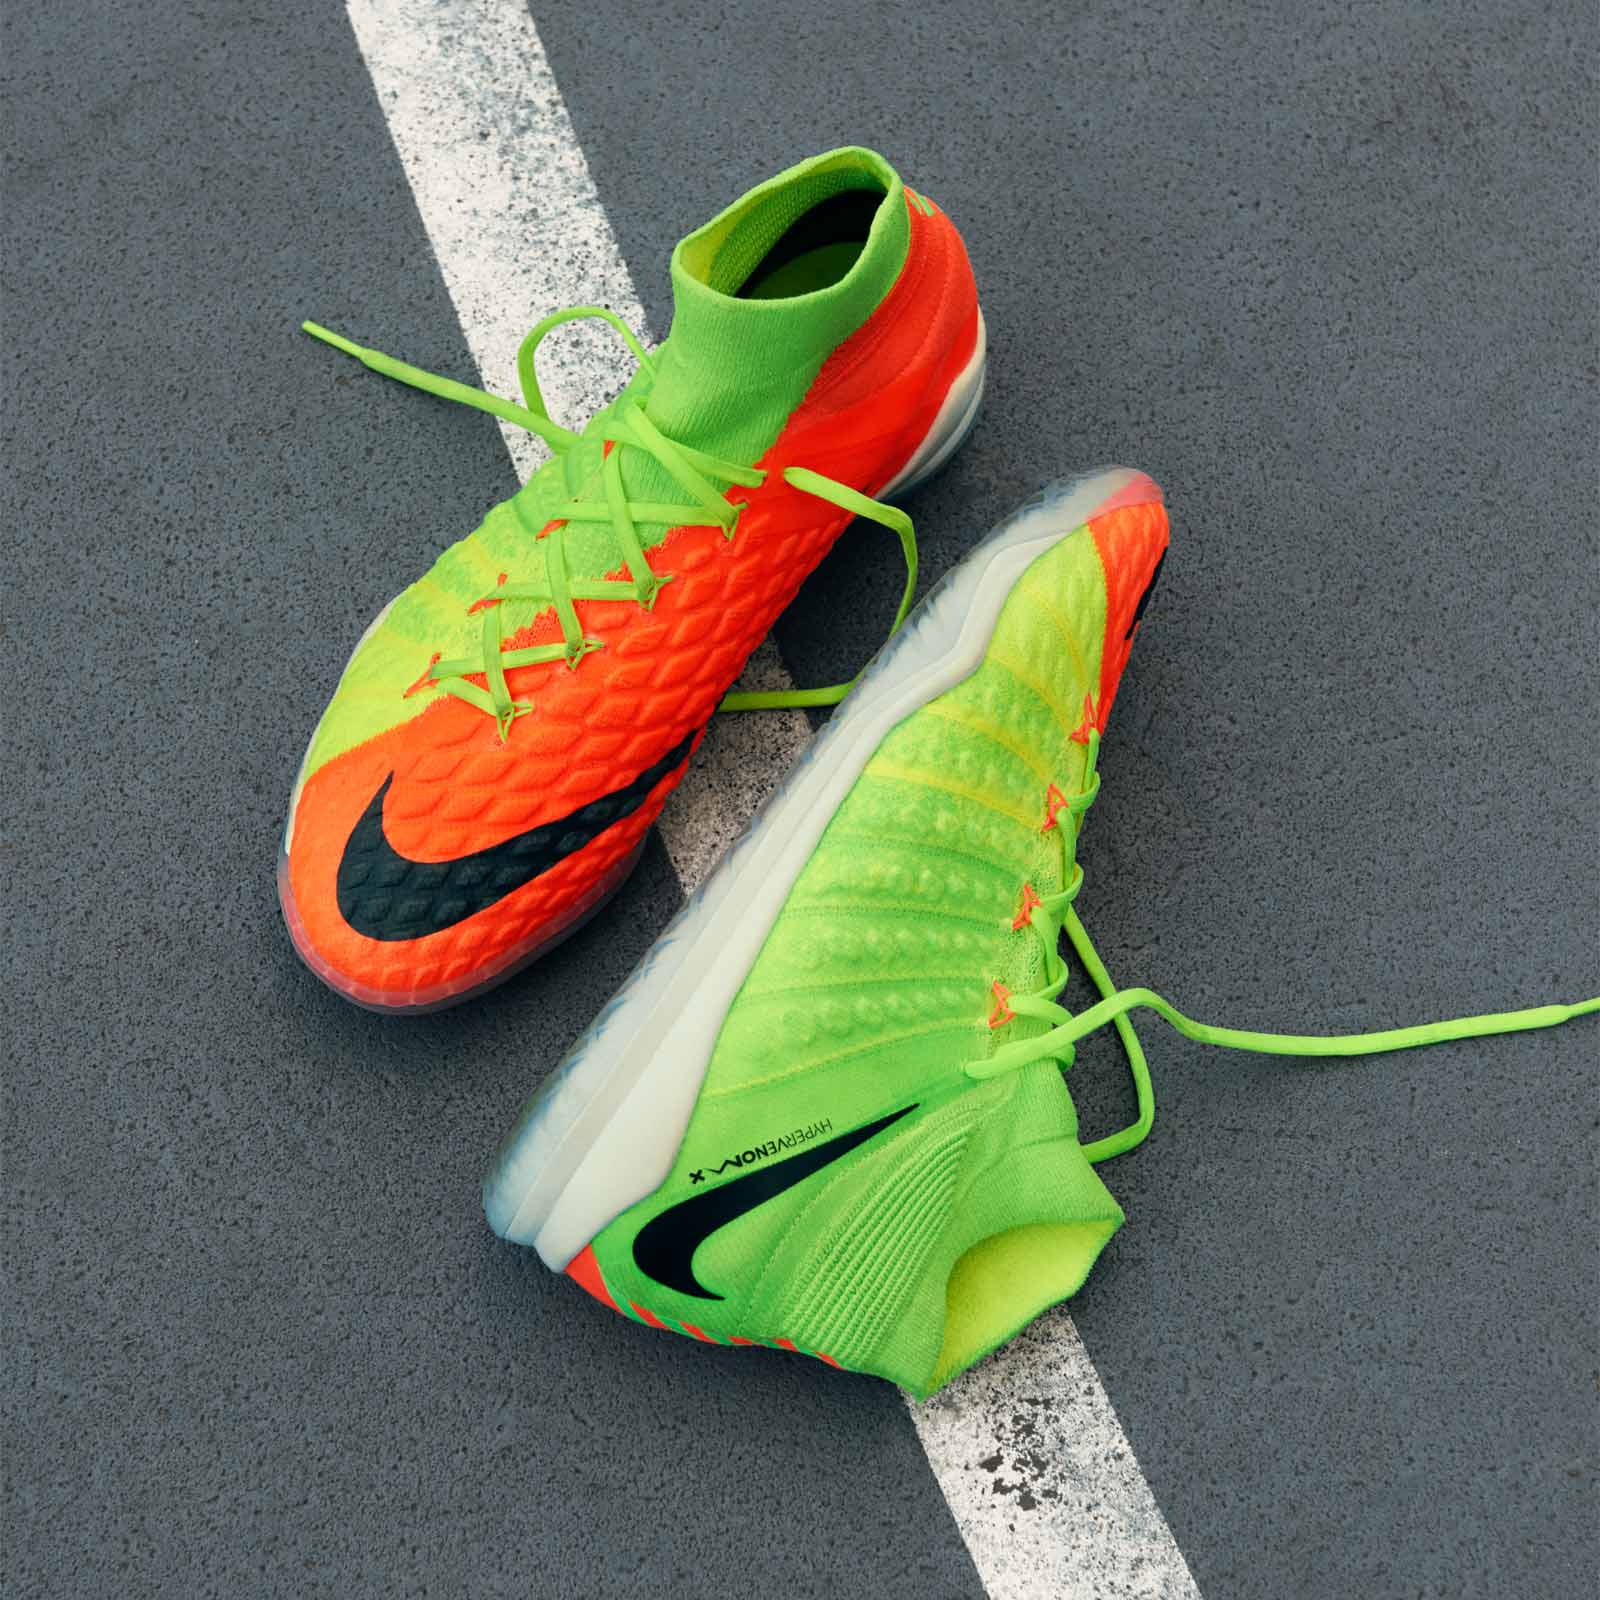 Agotar Enajenar arrojar polvo en los ojos All-New Nike HypervenomX Proximo II Revealed - Footy Headlines